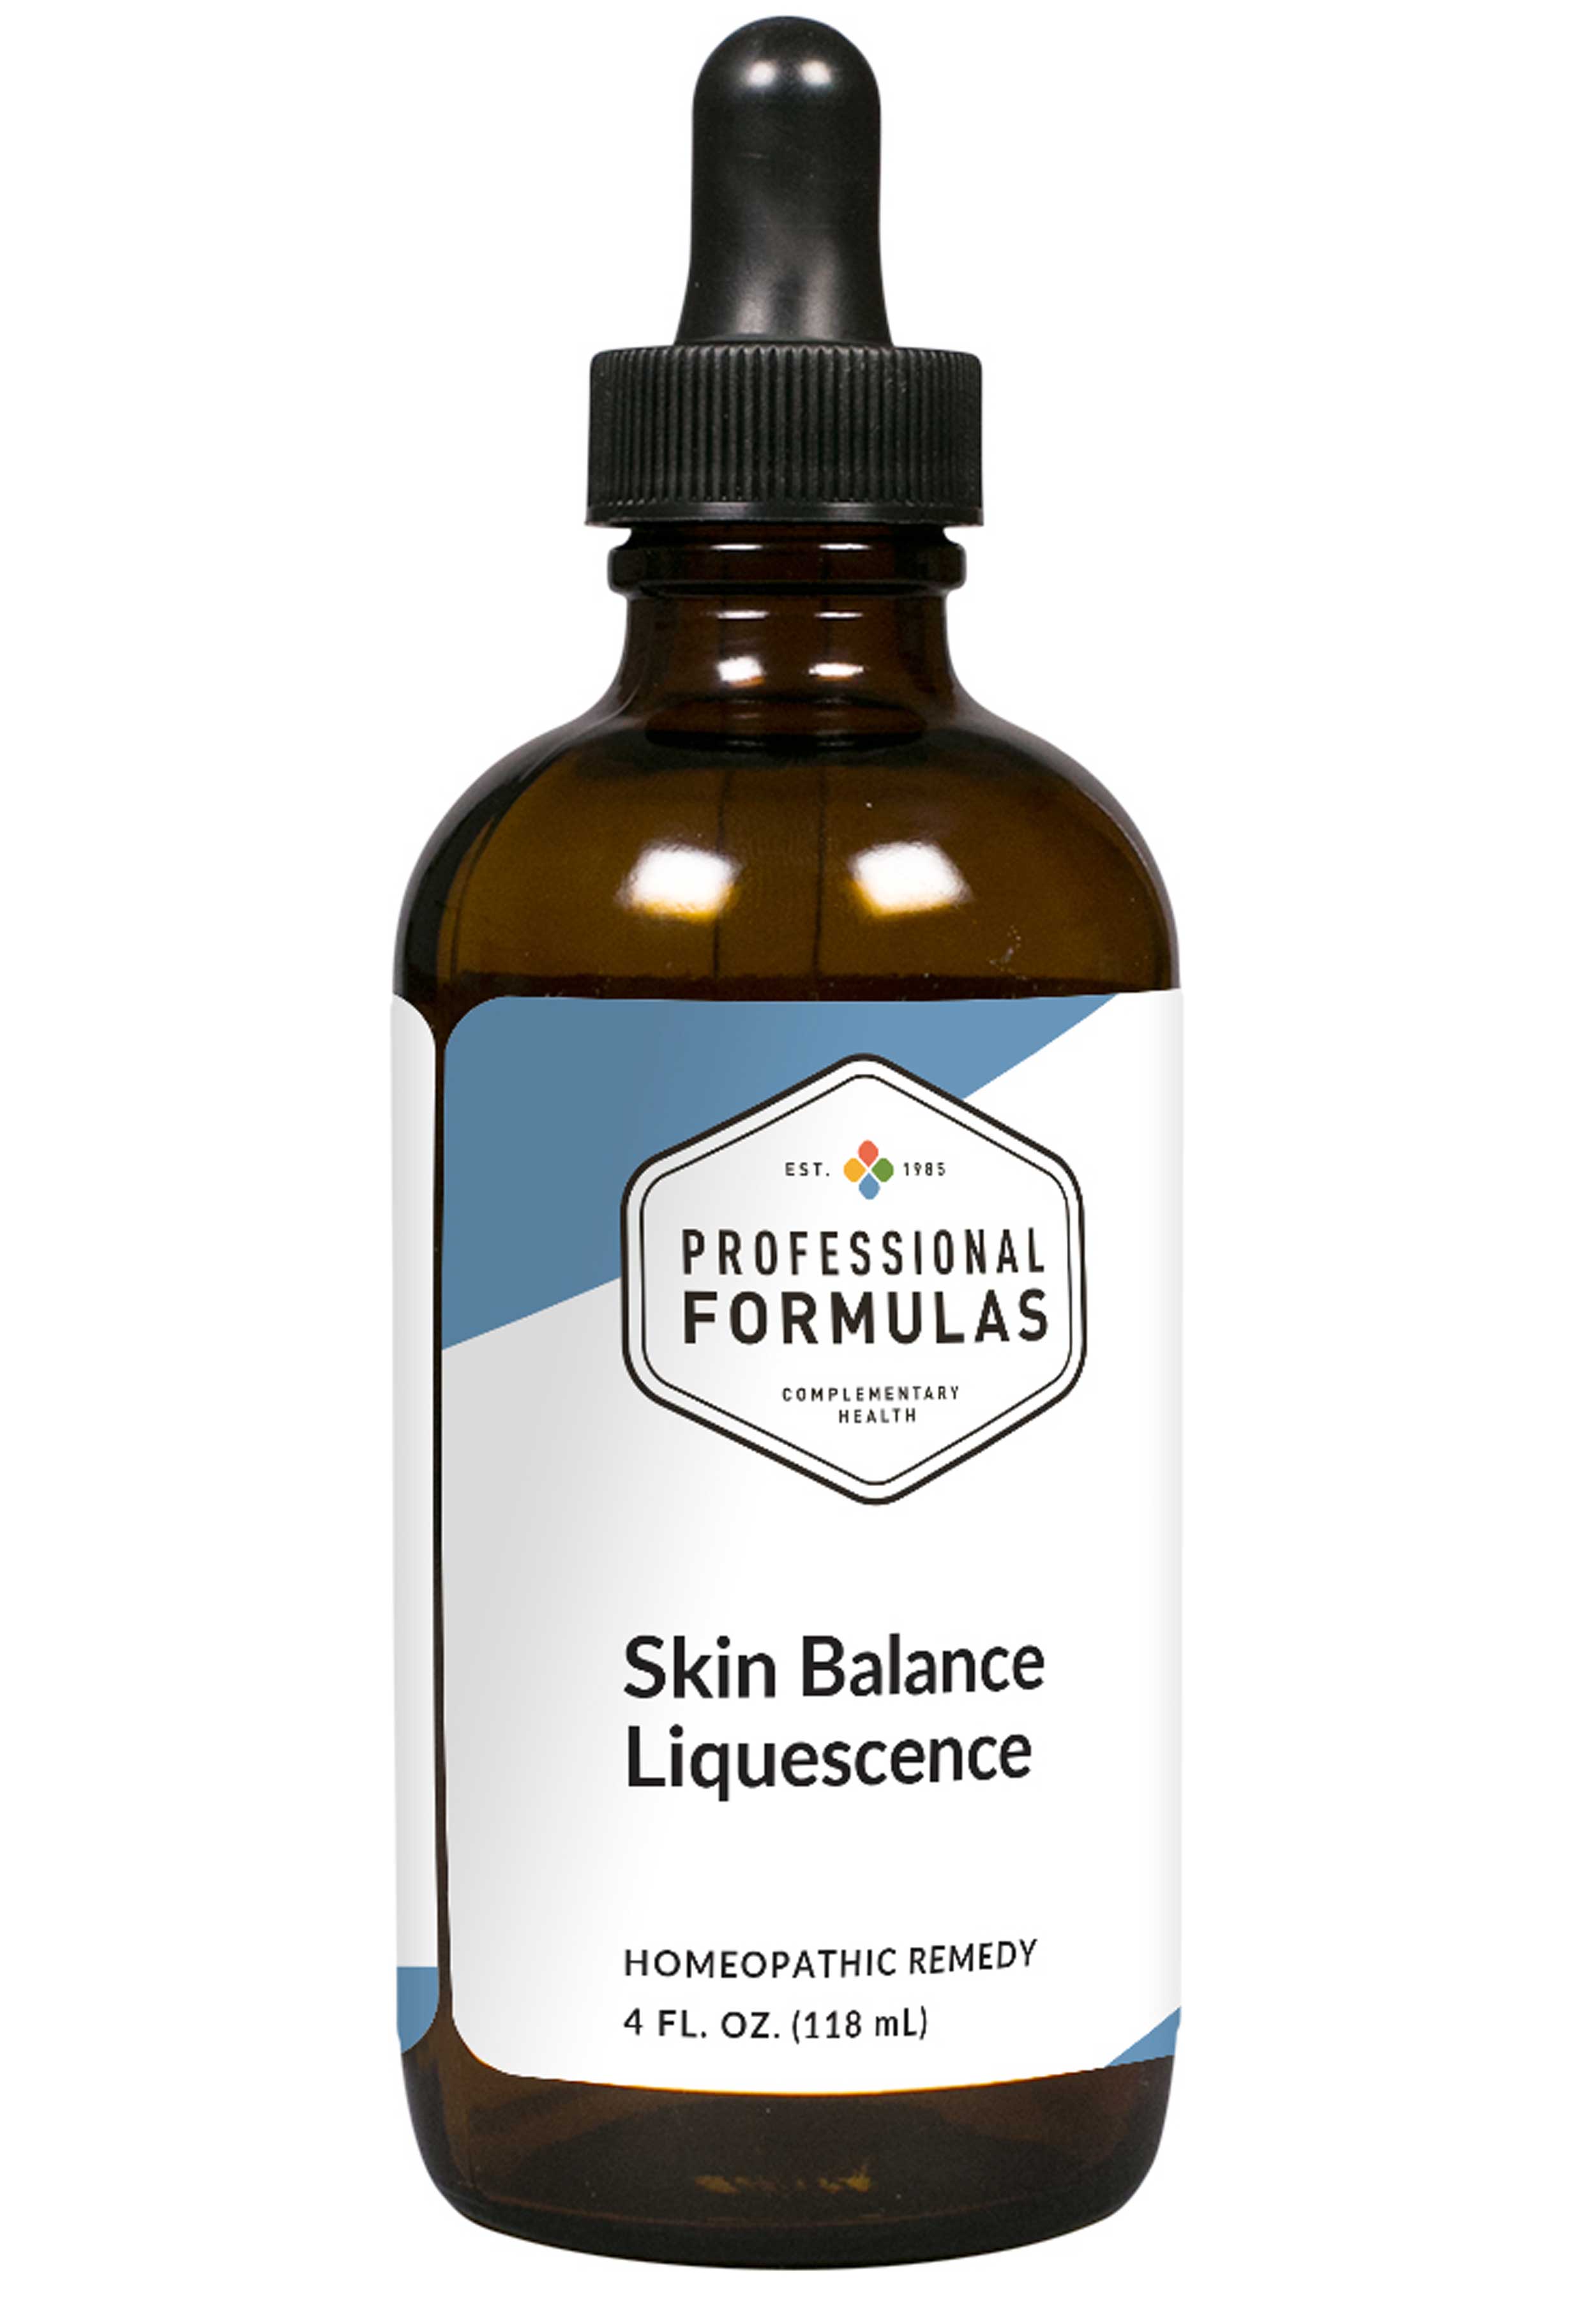 Professional Formulas Skin Balance Liquescence